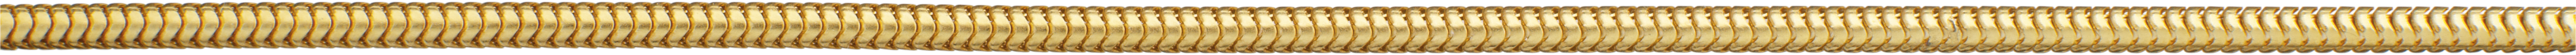 Snake chain gold 585/-Gg Ø 2,00mm